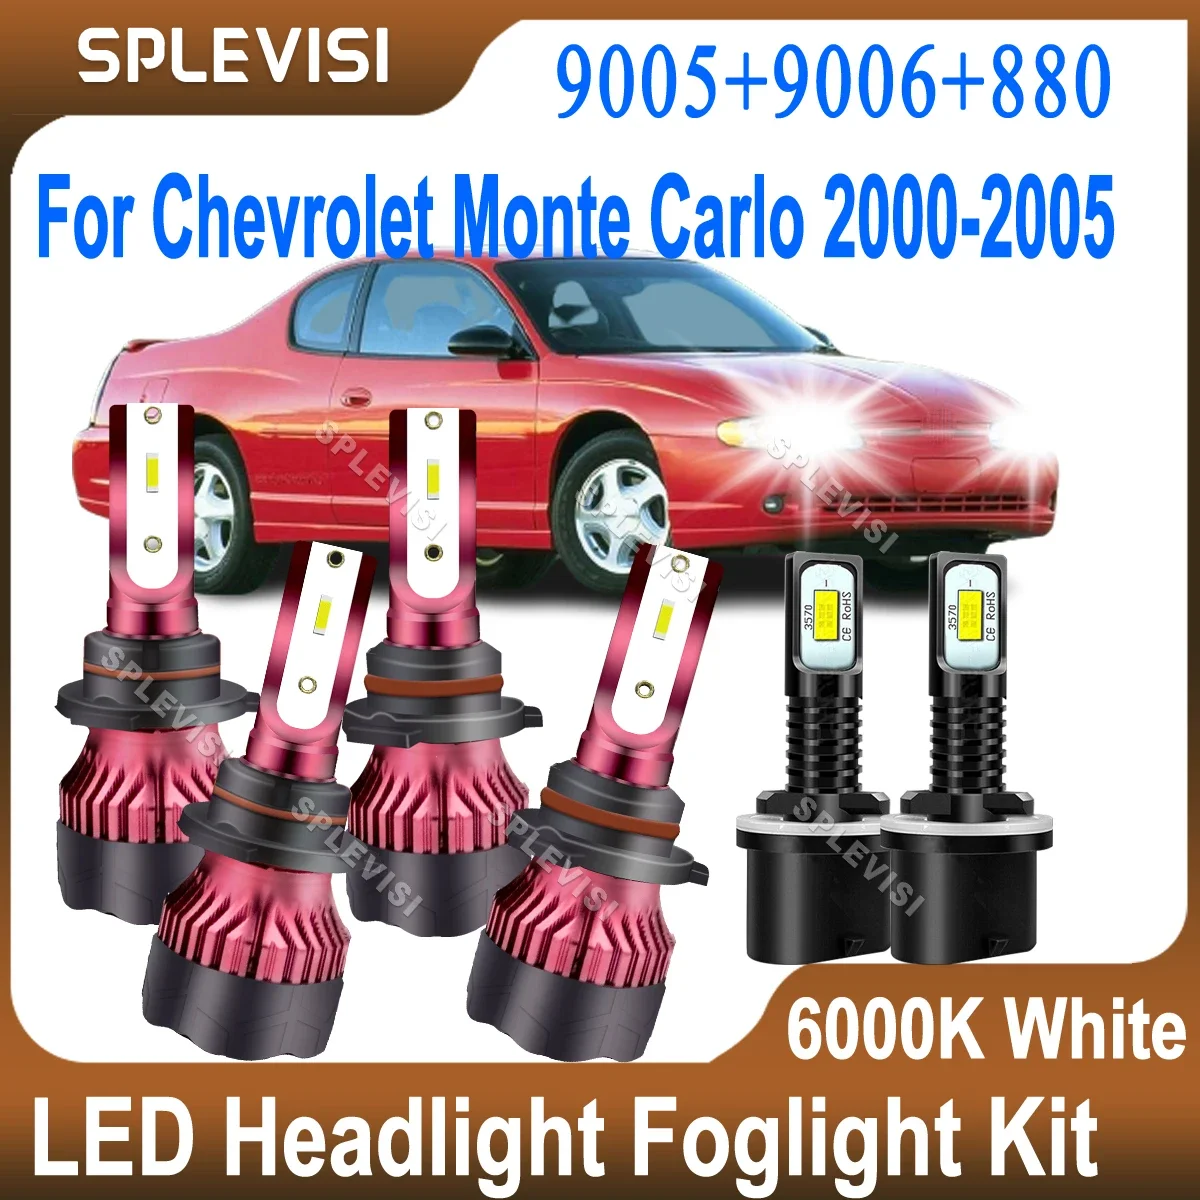 

4x LED Headlight 9005/HB3 High Beam 9006/HB4 Low Beam + 2x Foglight 880 For Chevrolet Monte Carlo 2000 2001 2002 2003 2004 2005